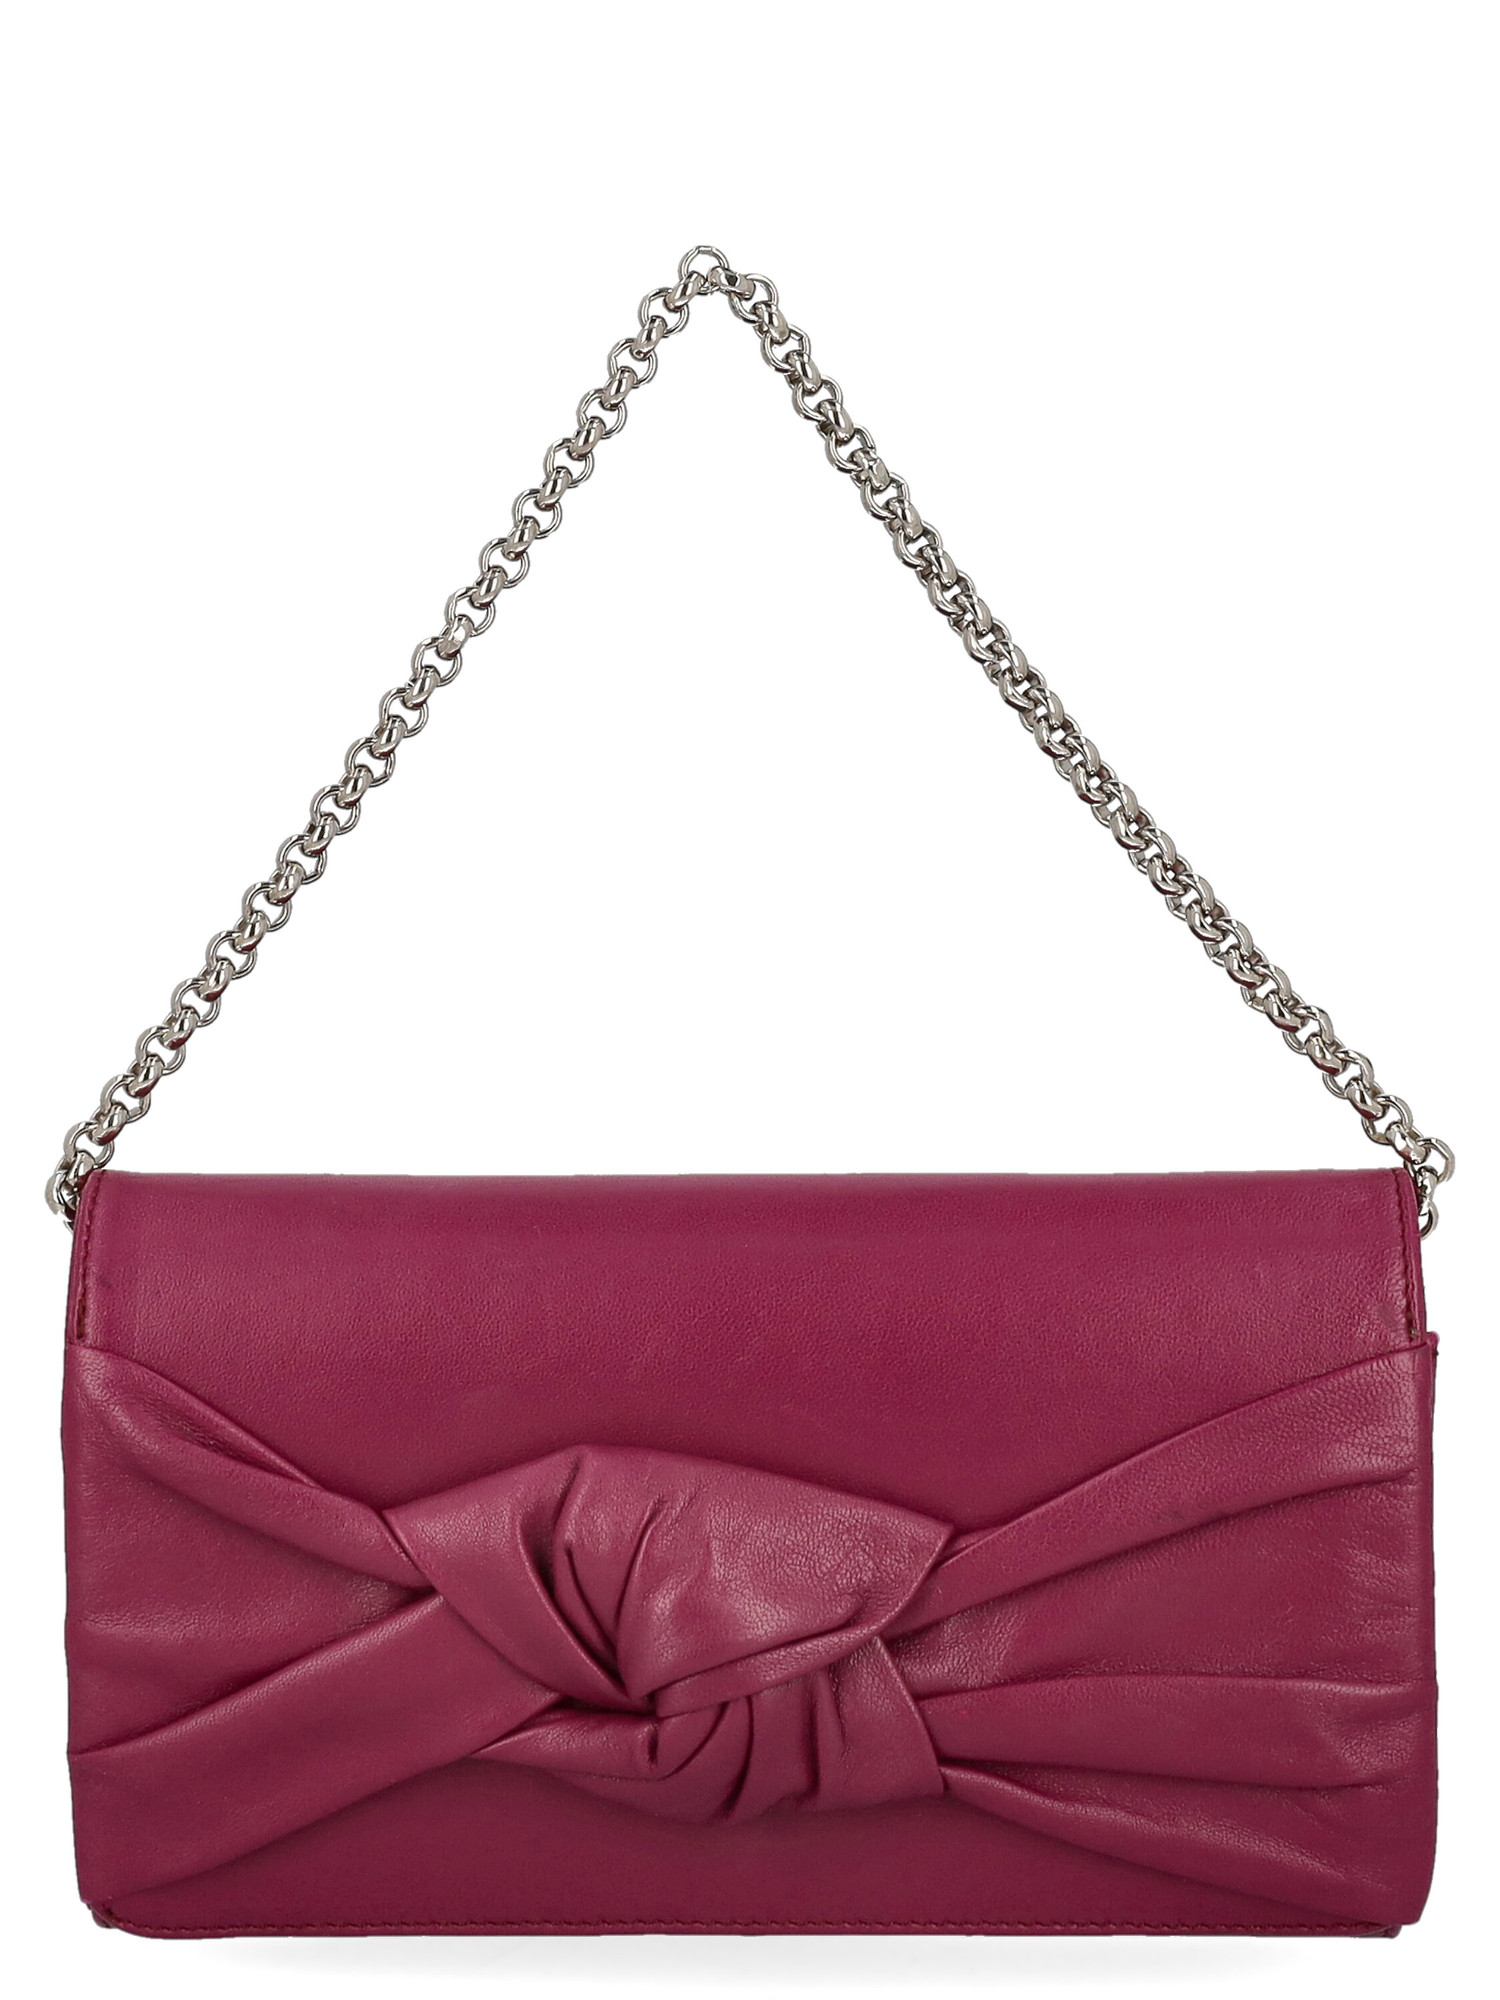 Sacs À Main Pour Femme - Giuseppe Zanotti - En Leather Purple - Taille:  -